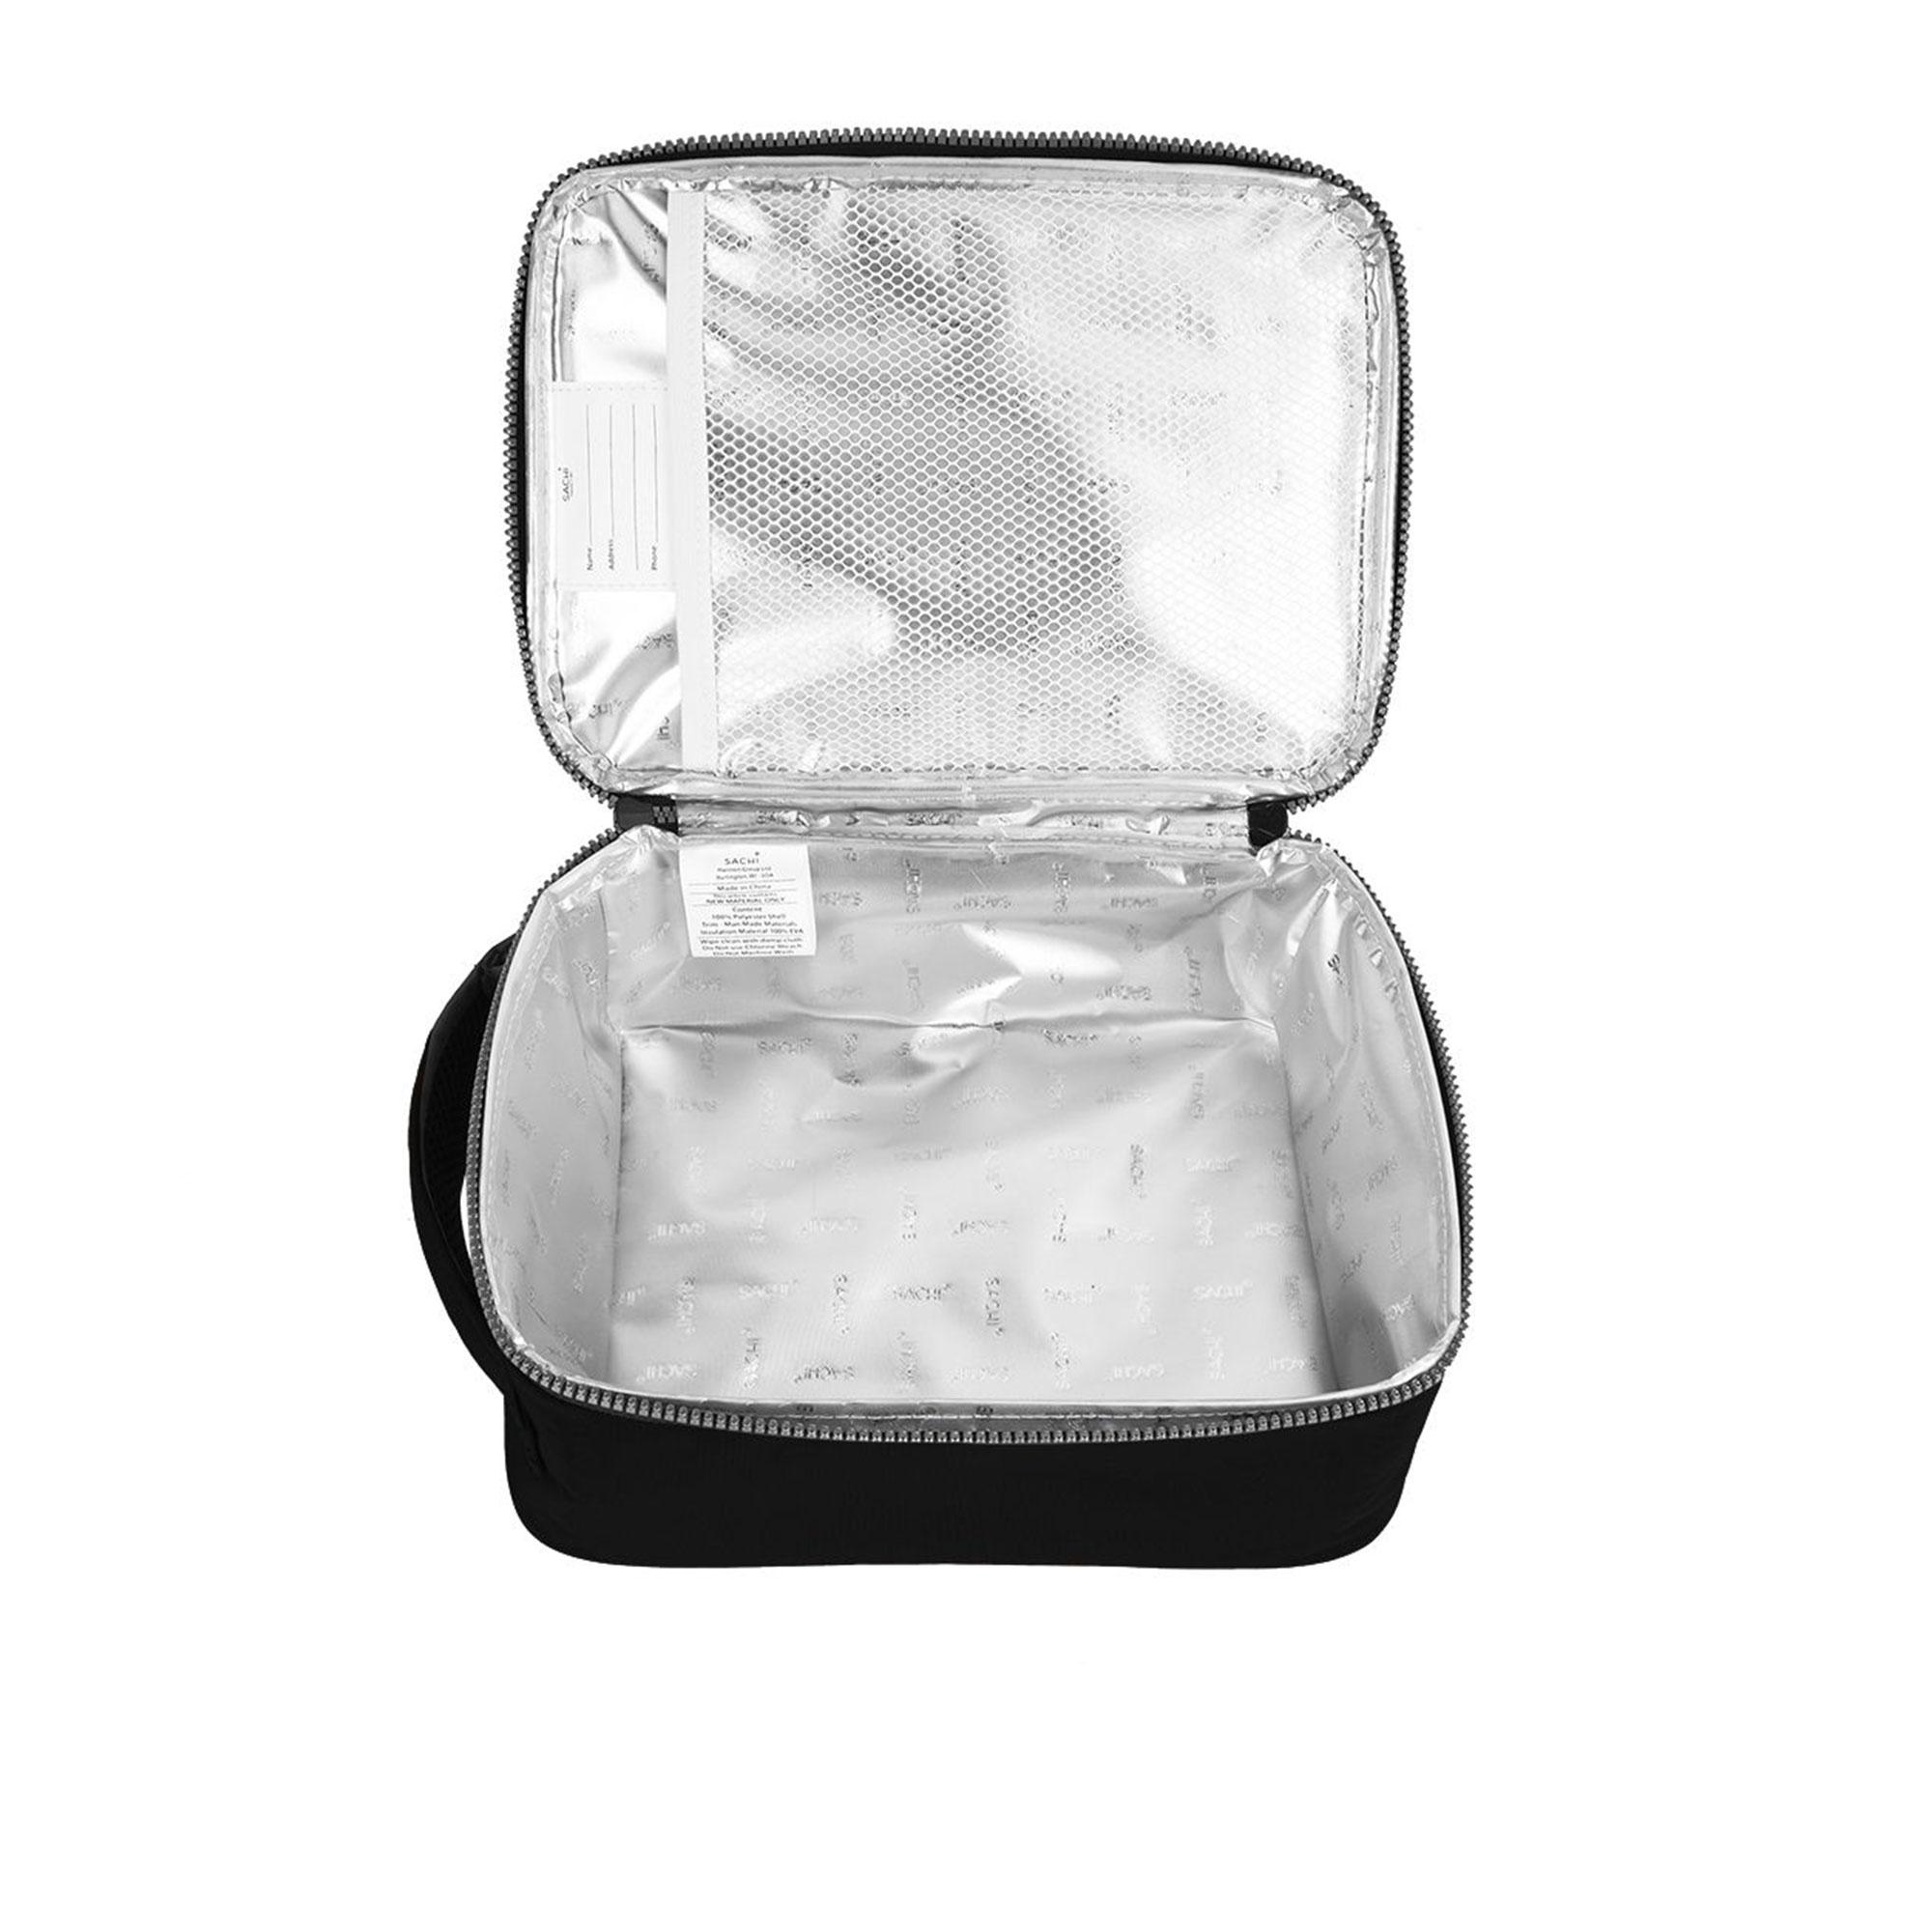 Sachi Explorer Insulated Lunch Bag Black Image 4